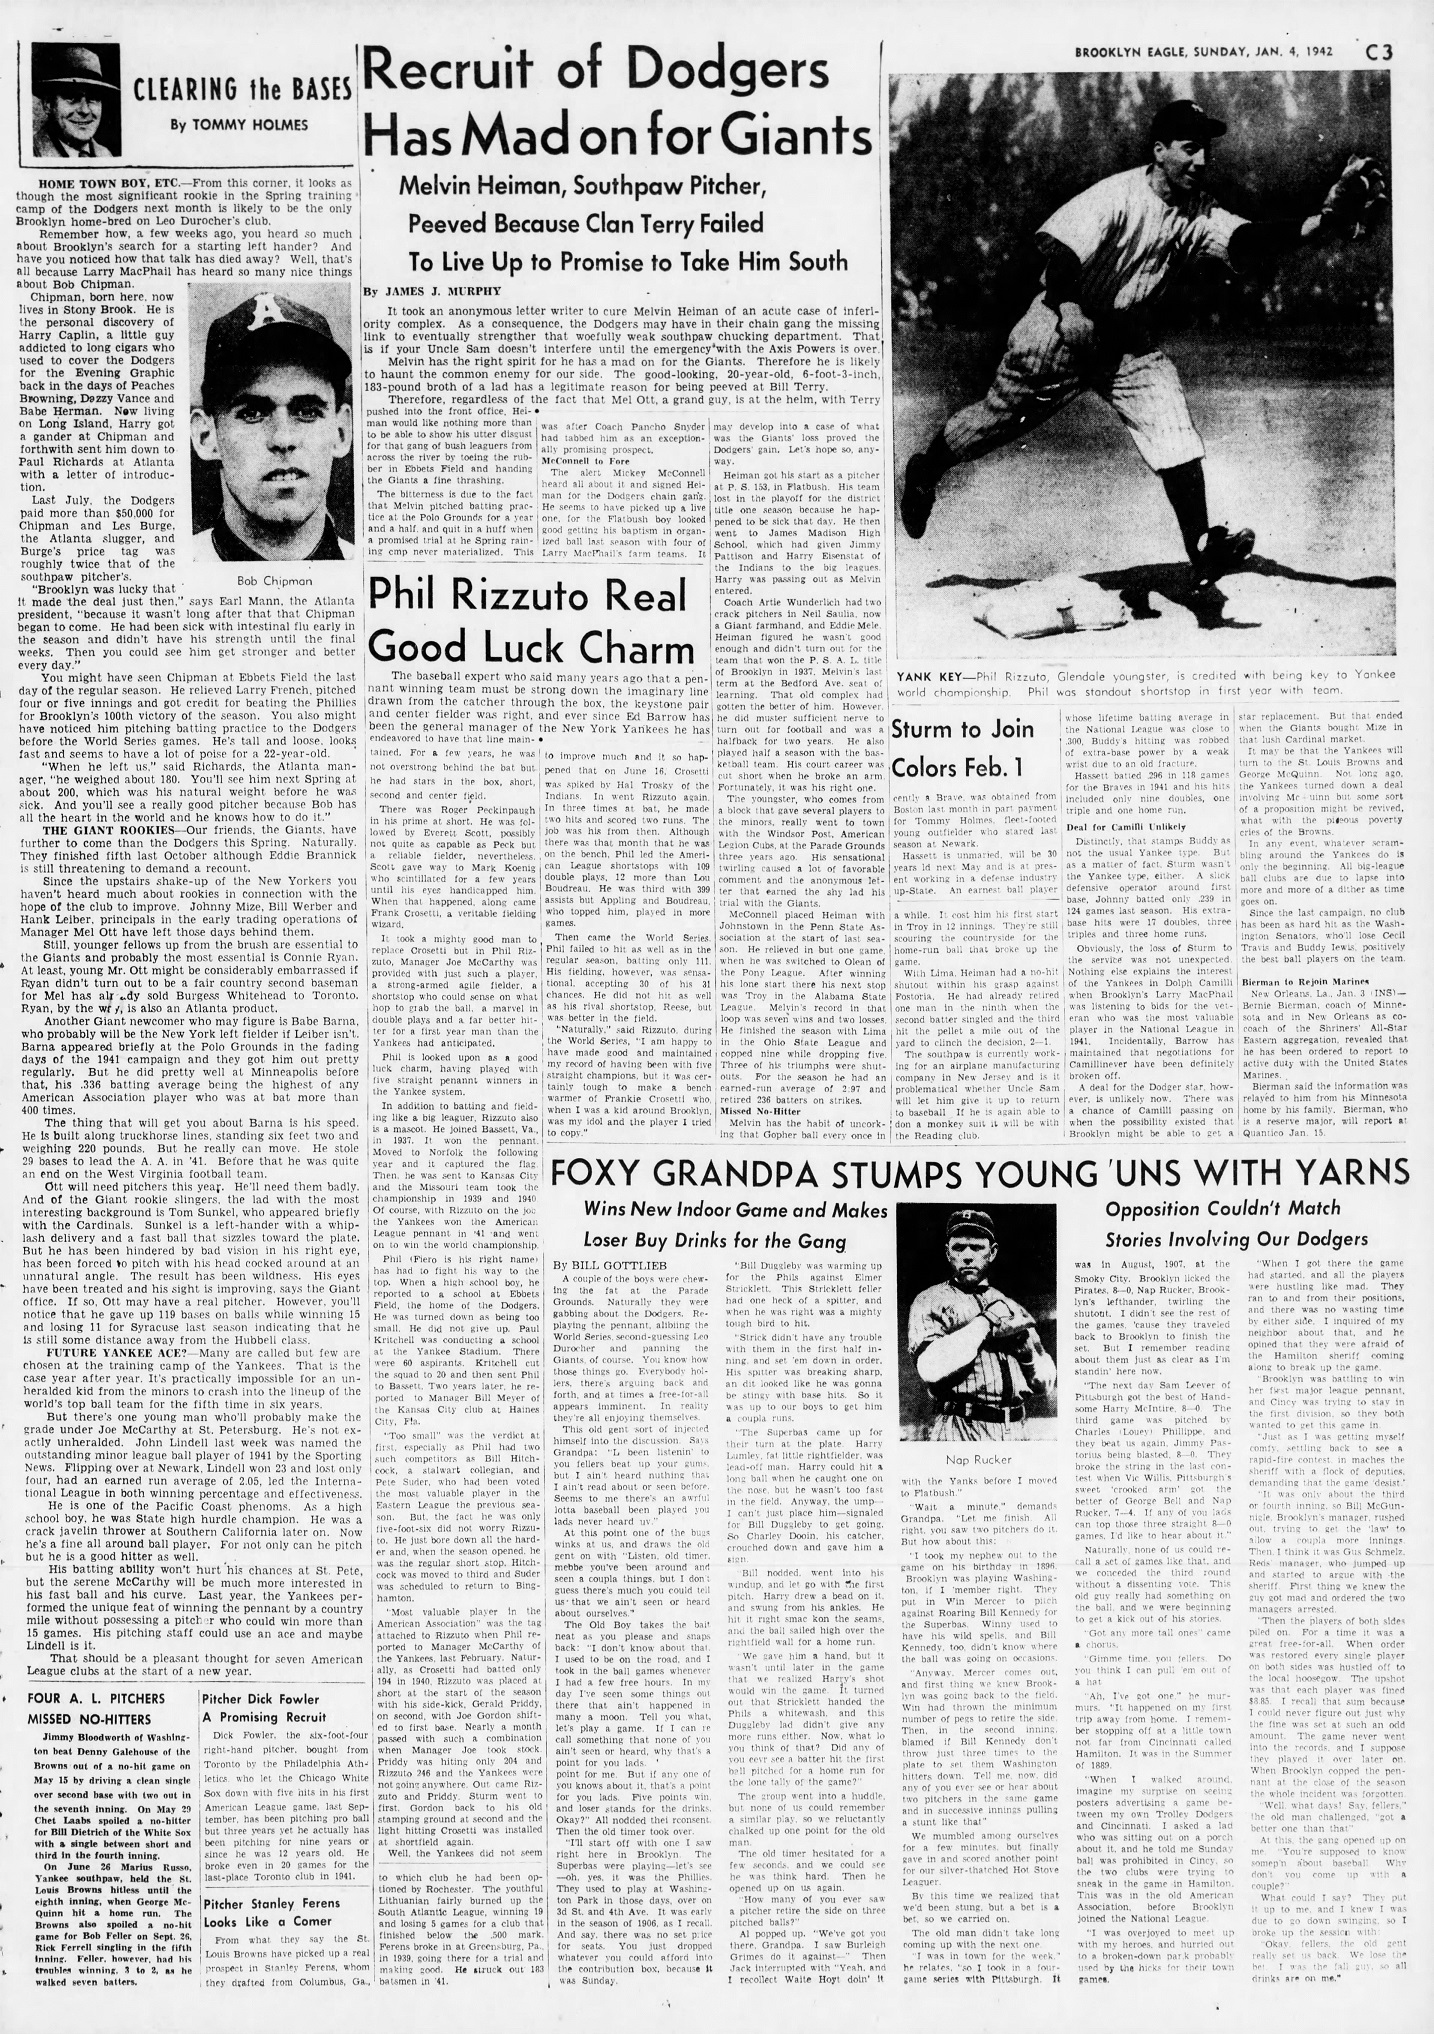 The_Brooklyn_Daily_Eagle_Sun__Jan_4__1942_(2).jpg